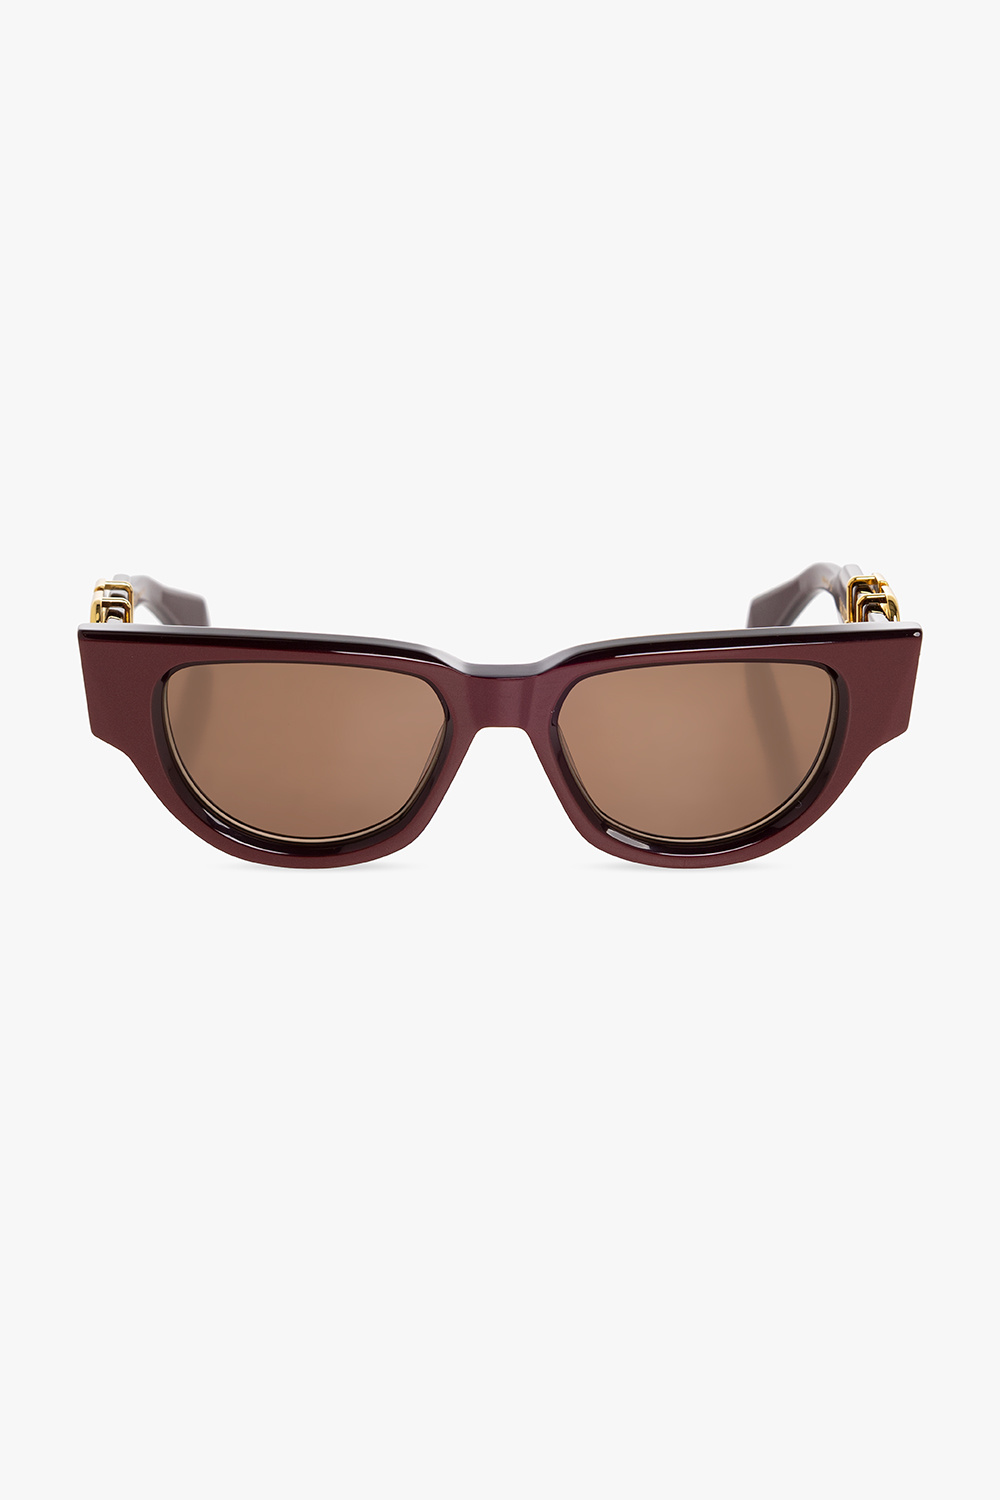 Valentino Eyewear Sunglasses with logo